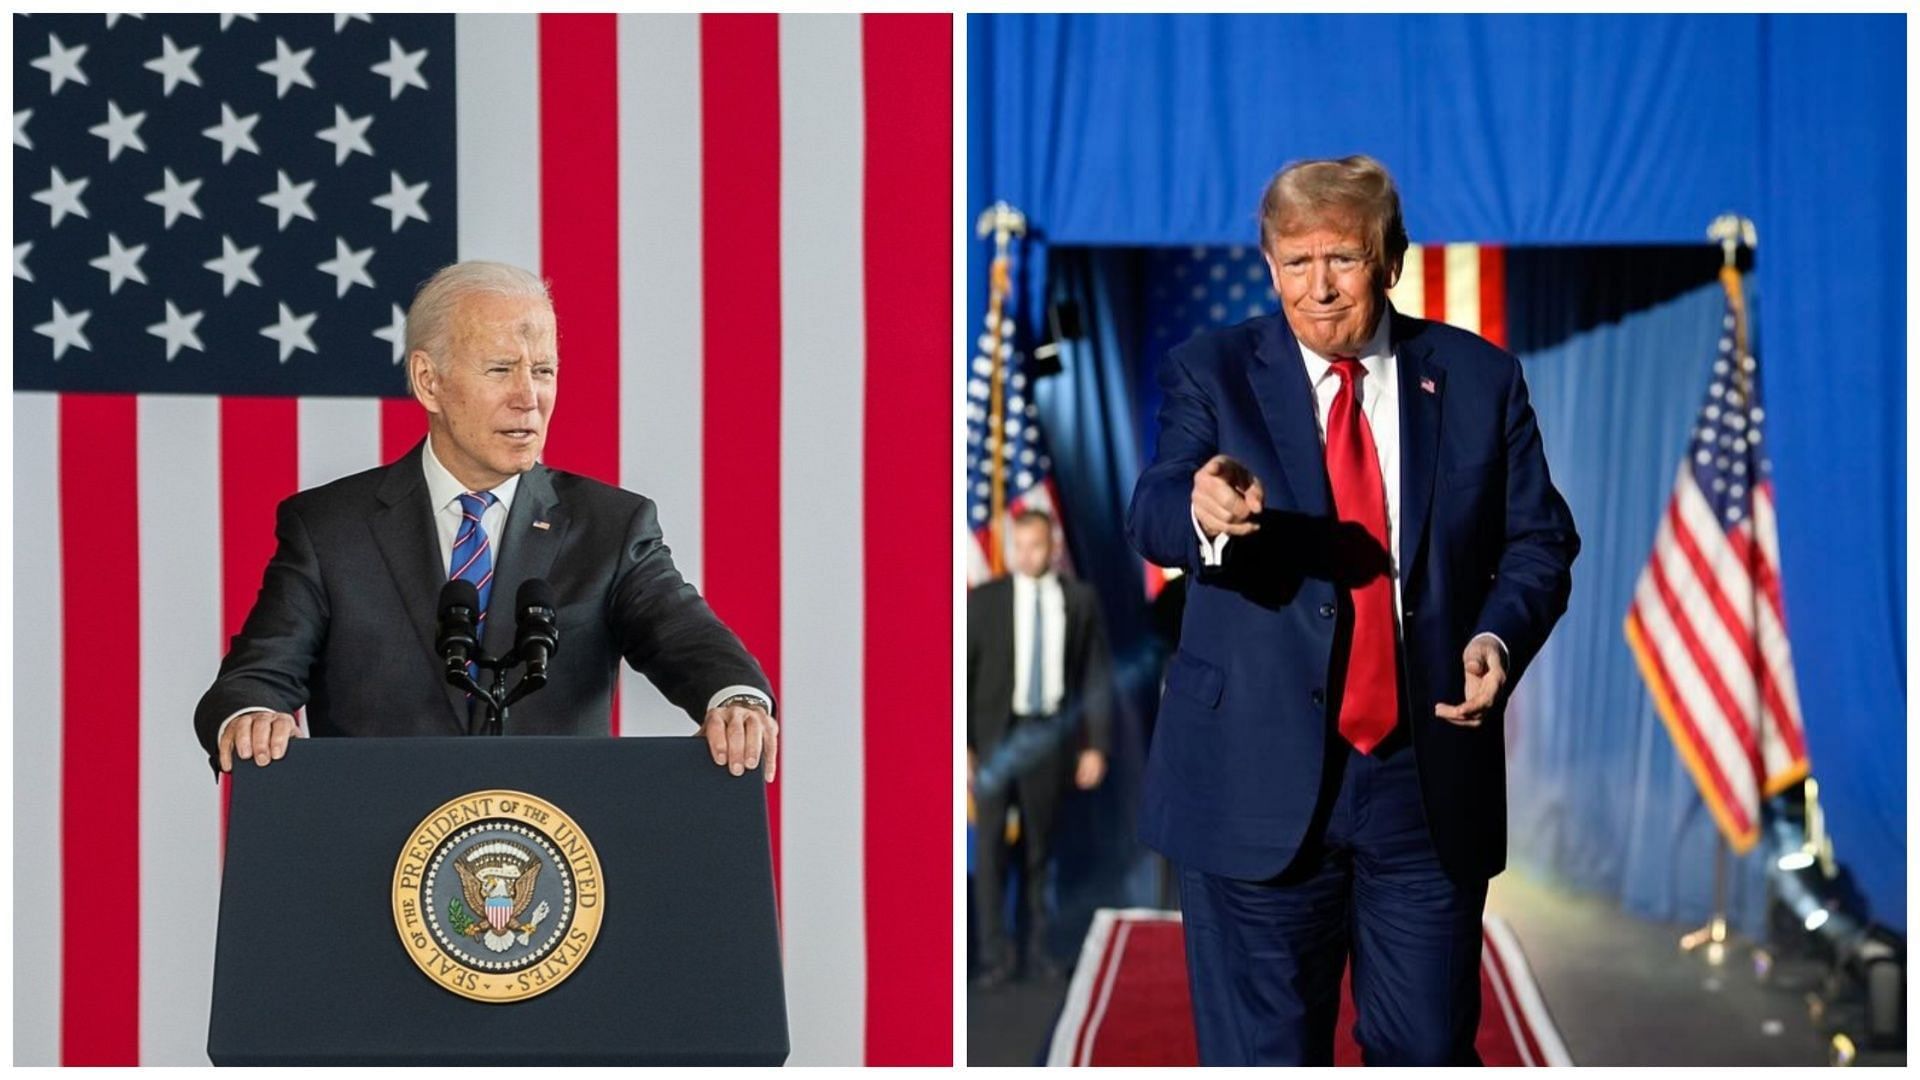 Joe Biden criticized Donald Trump